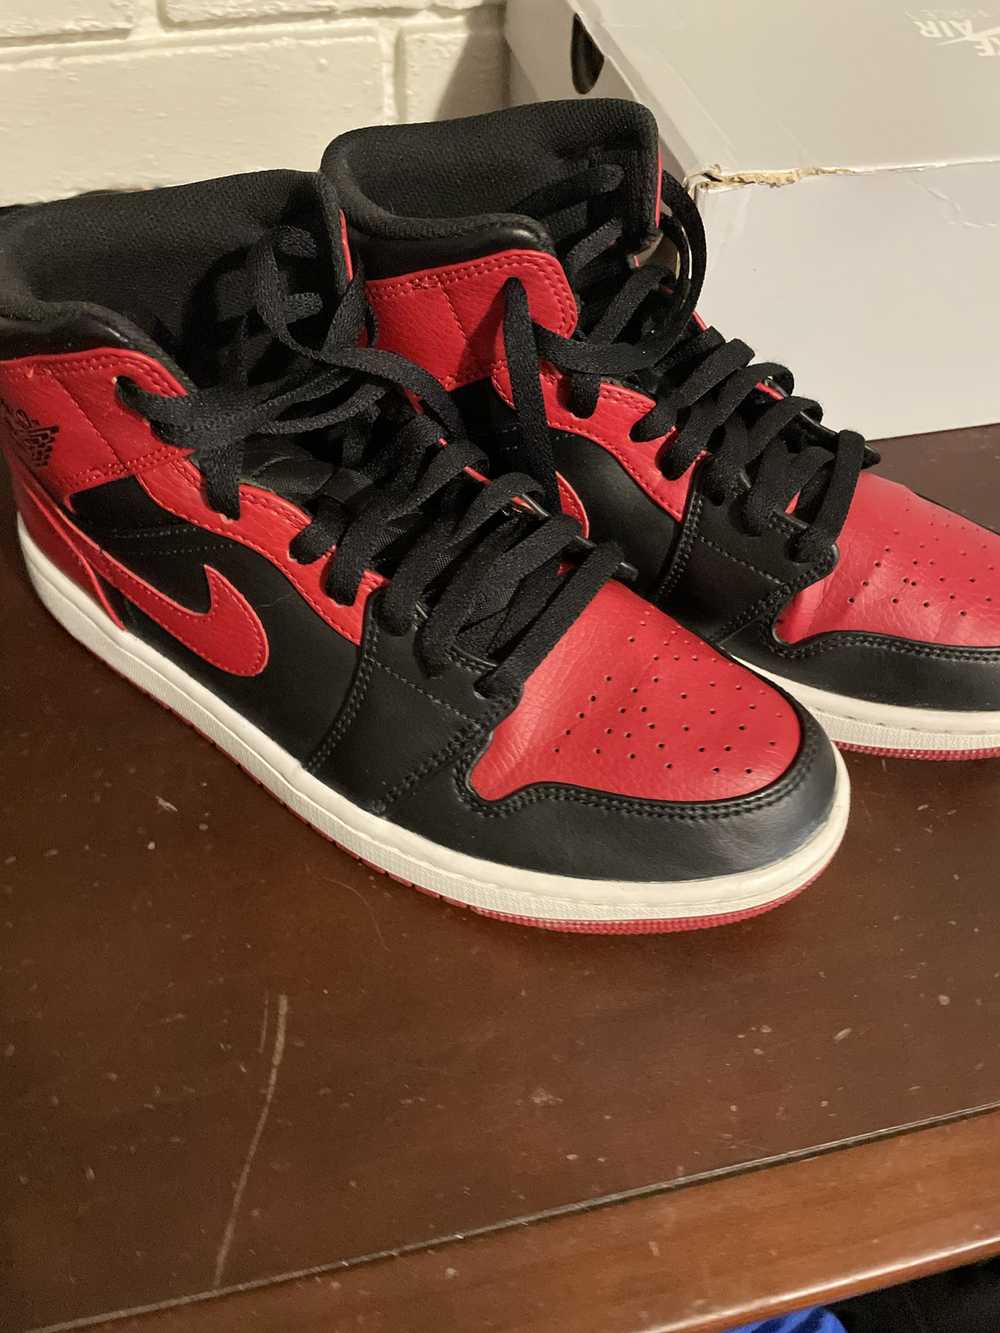 Nike air jordan 1 banned red and black - image 1